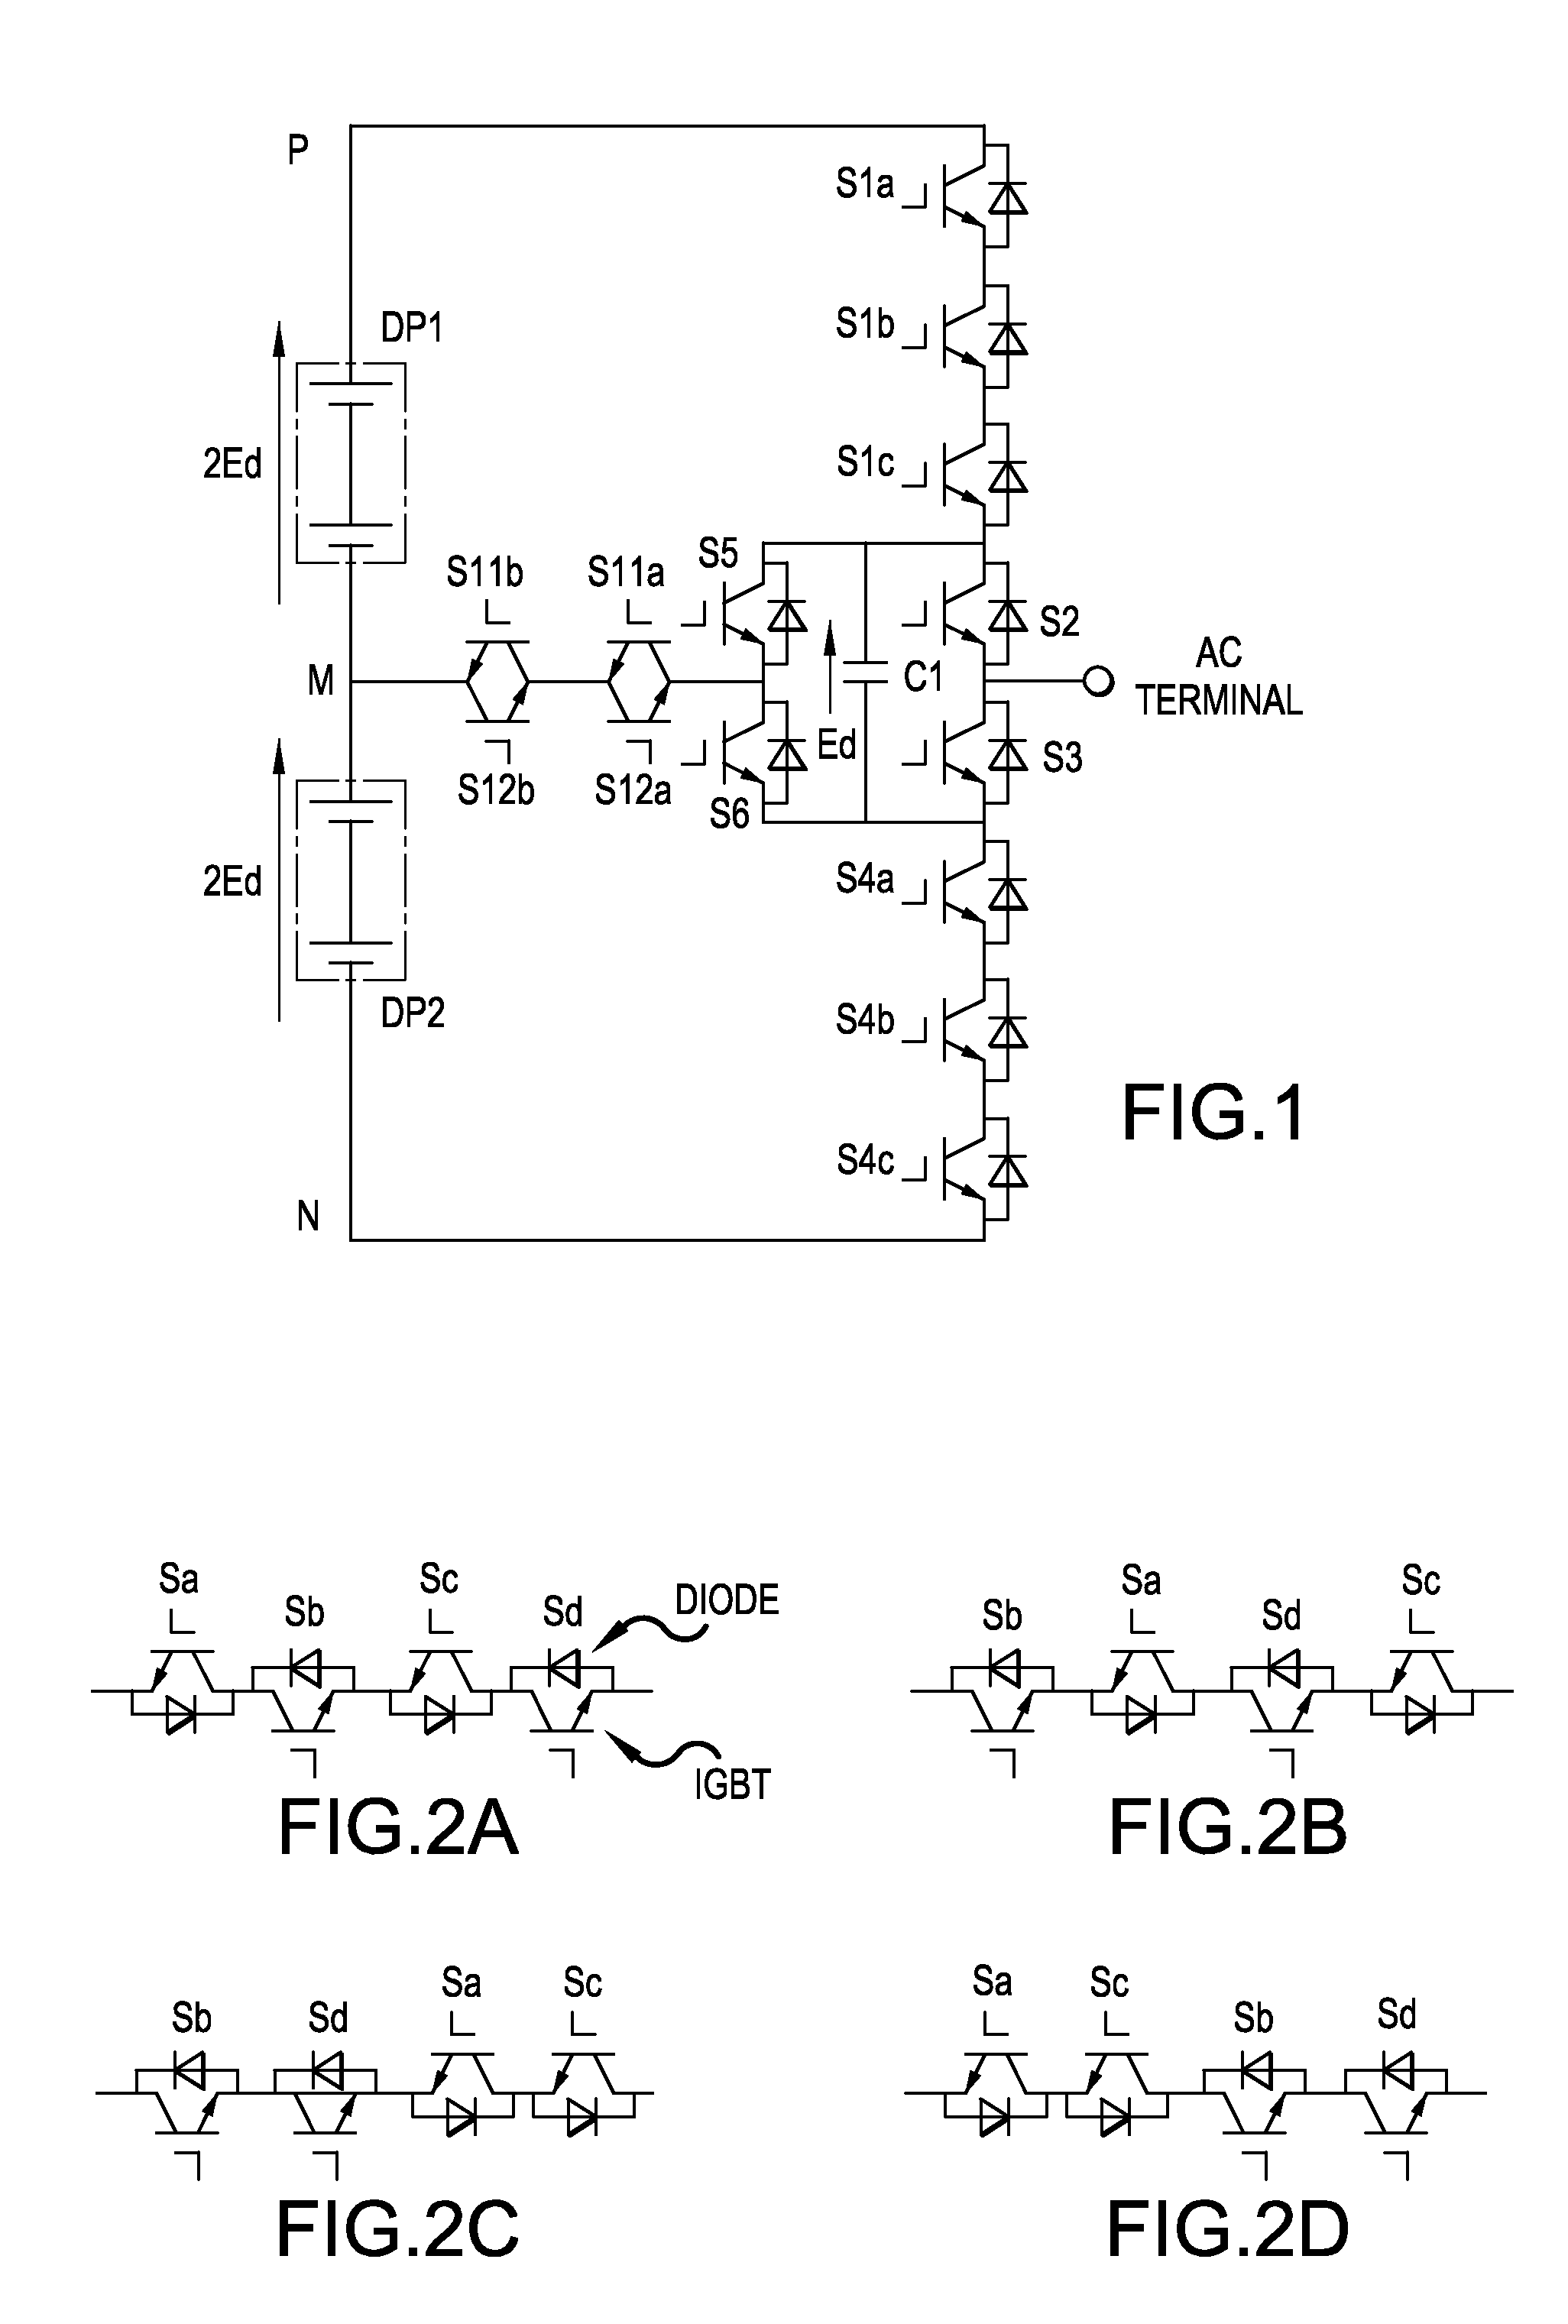 Multilevel power conversion circuit